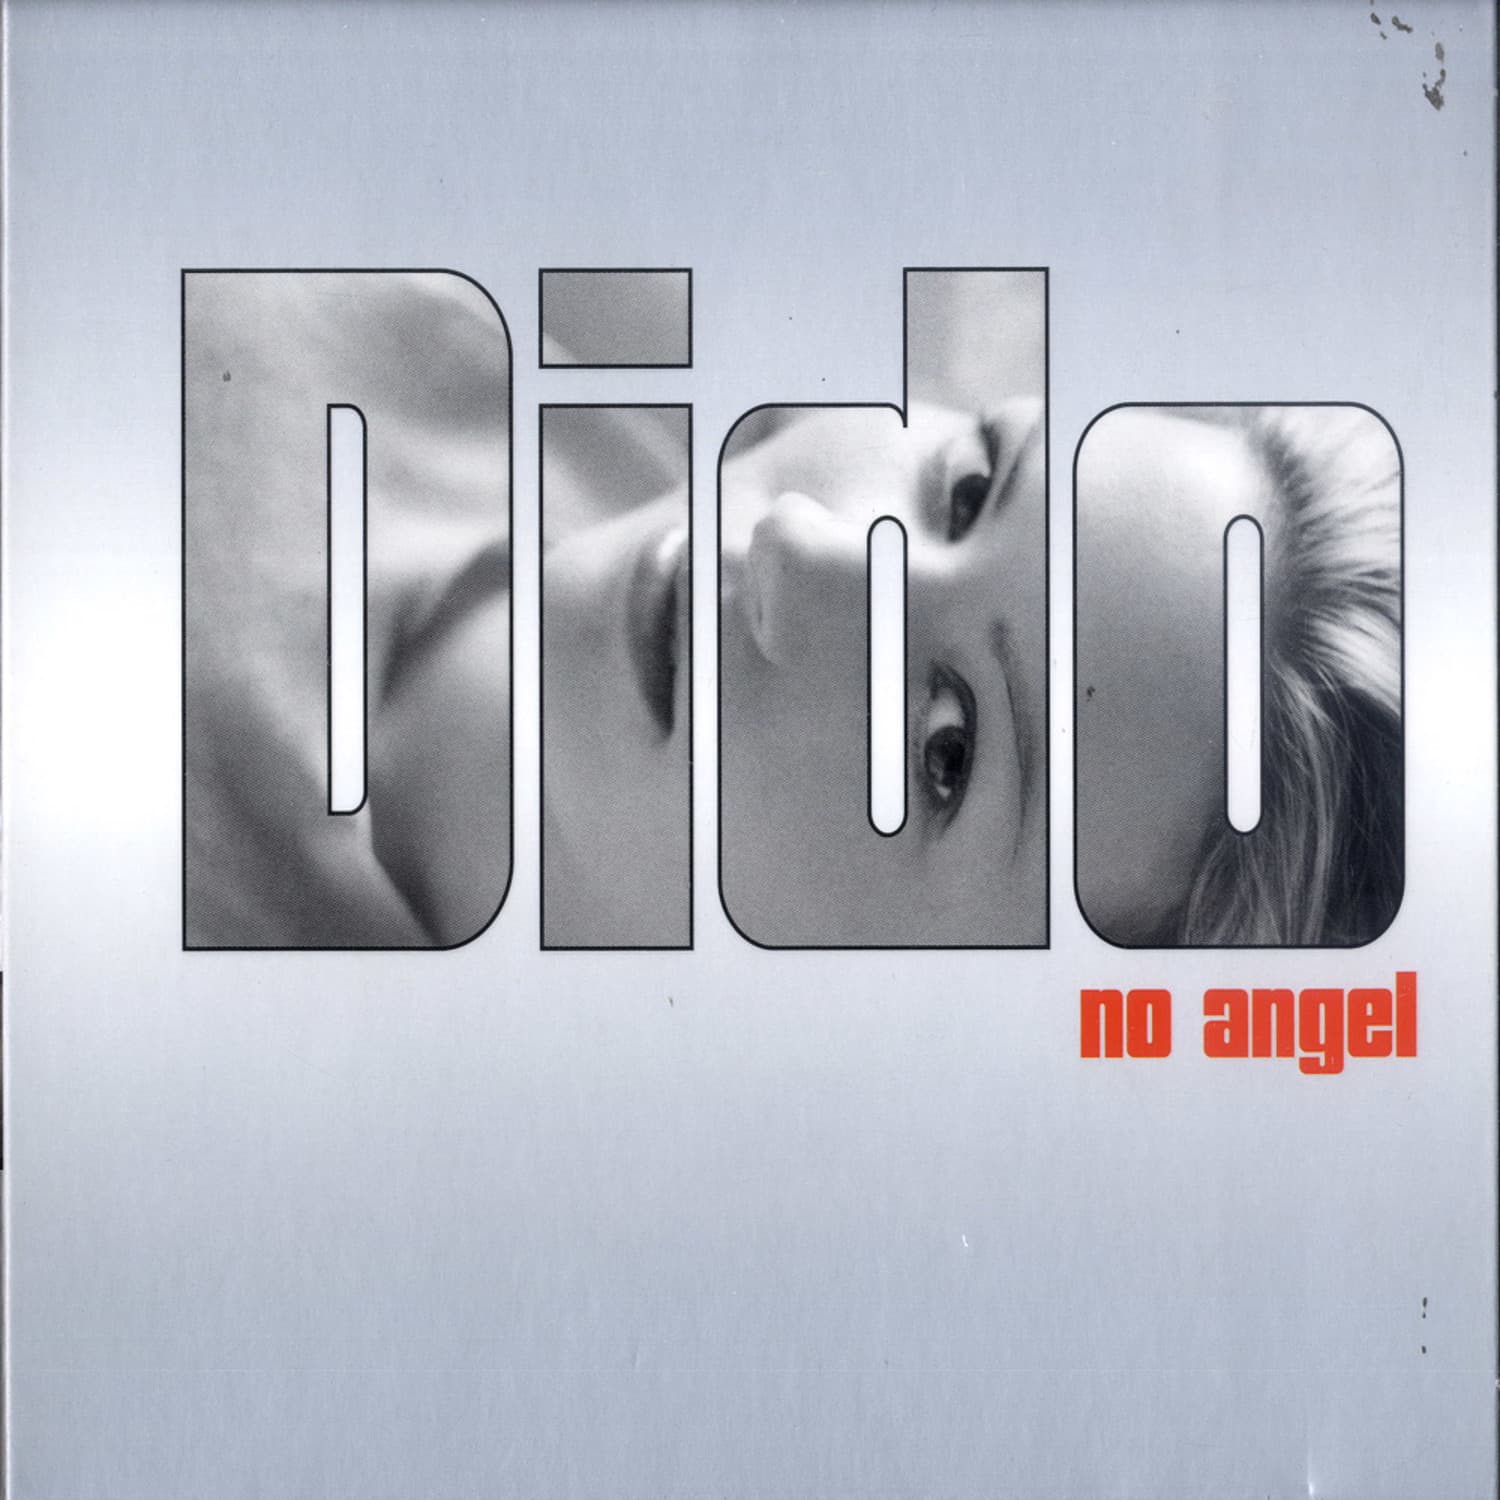 Dido - NO ANGEL 